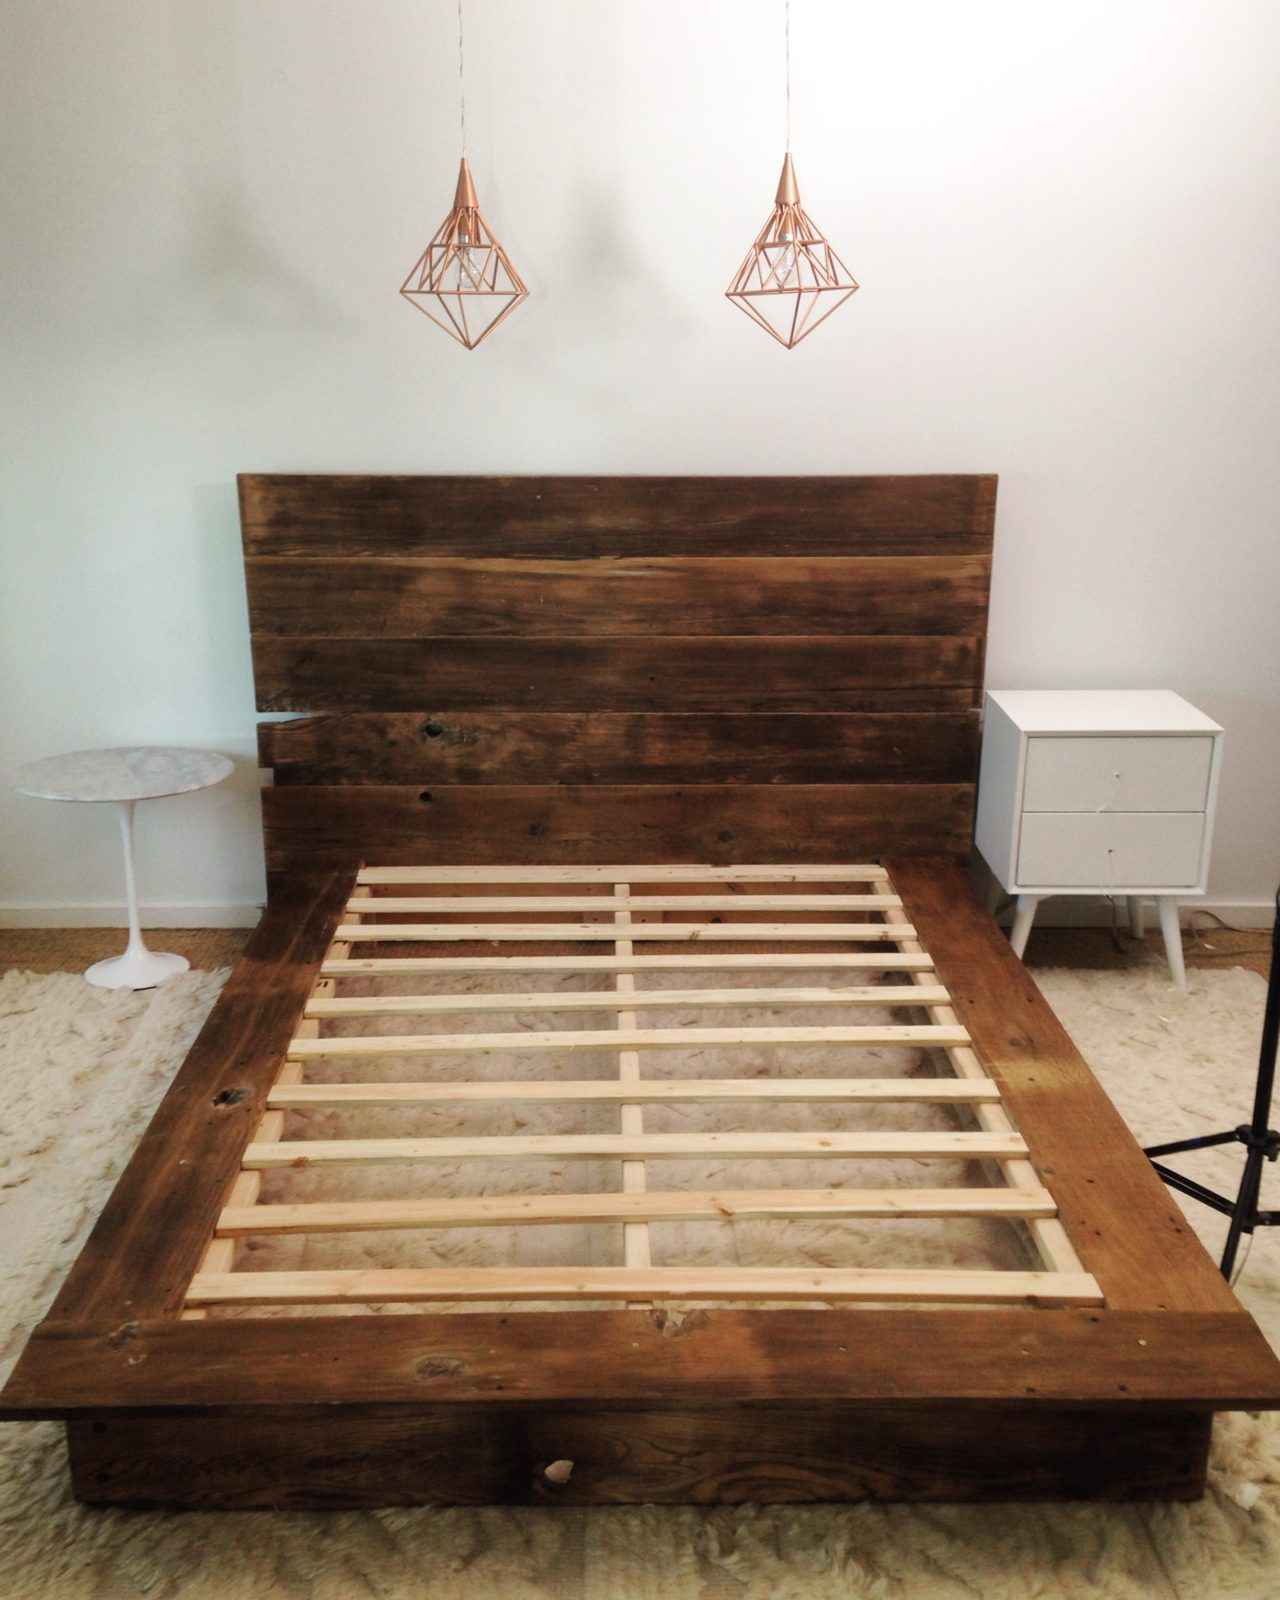 DIY Wood Beds
 DIY Reclaimed Wood Platform Bed in 2019 Home